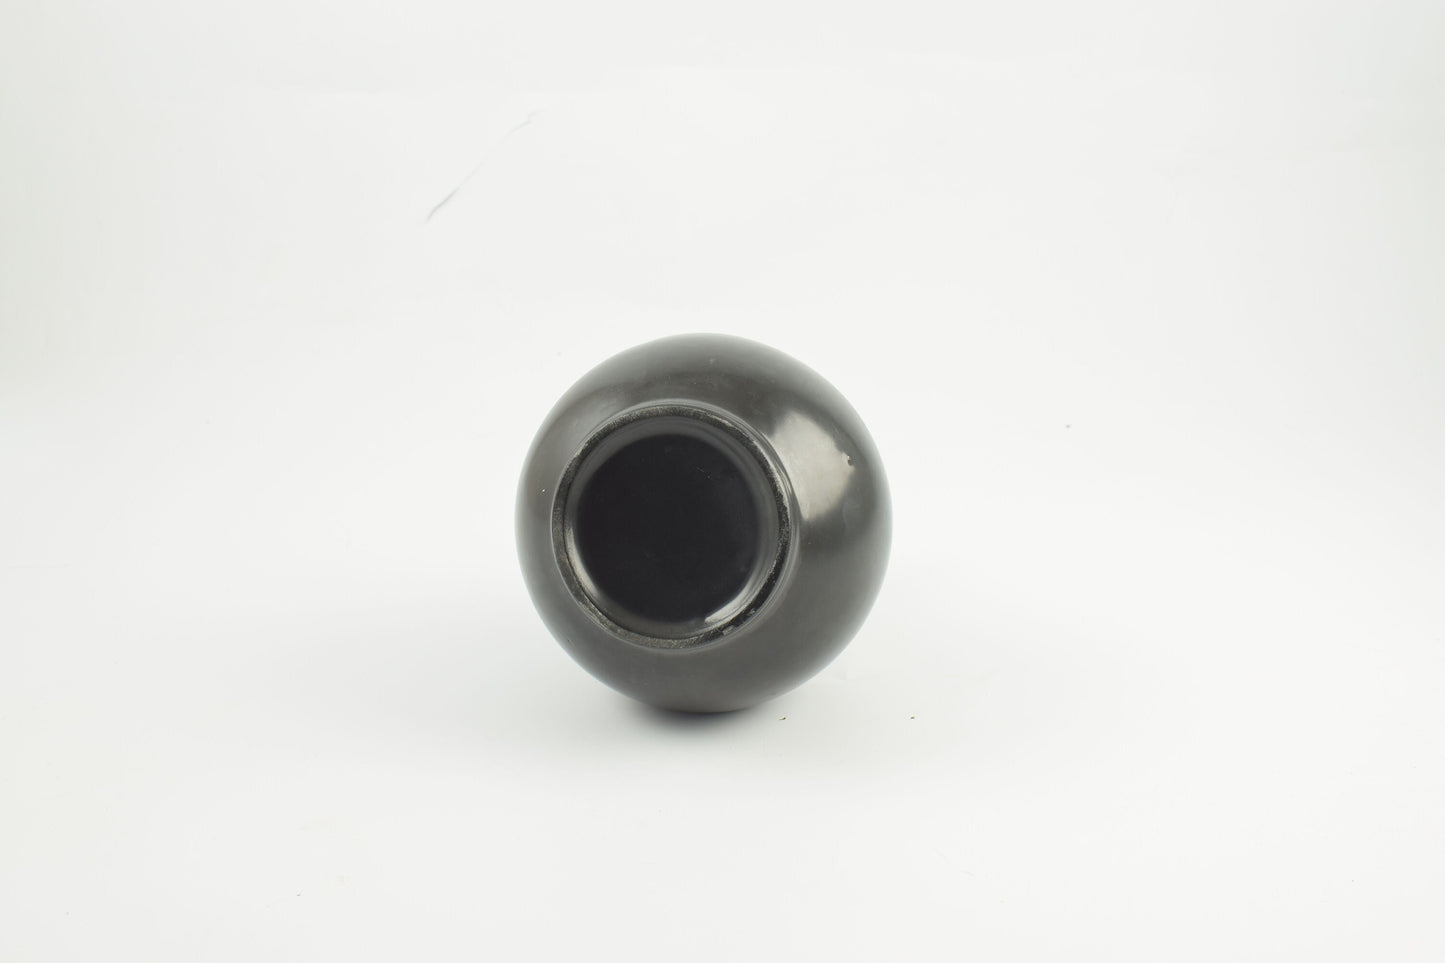 Ceramic Vase Mosa Maastricht, black vase or can from dutch ceramic company Mosa